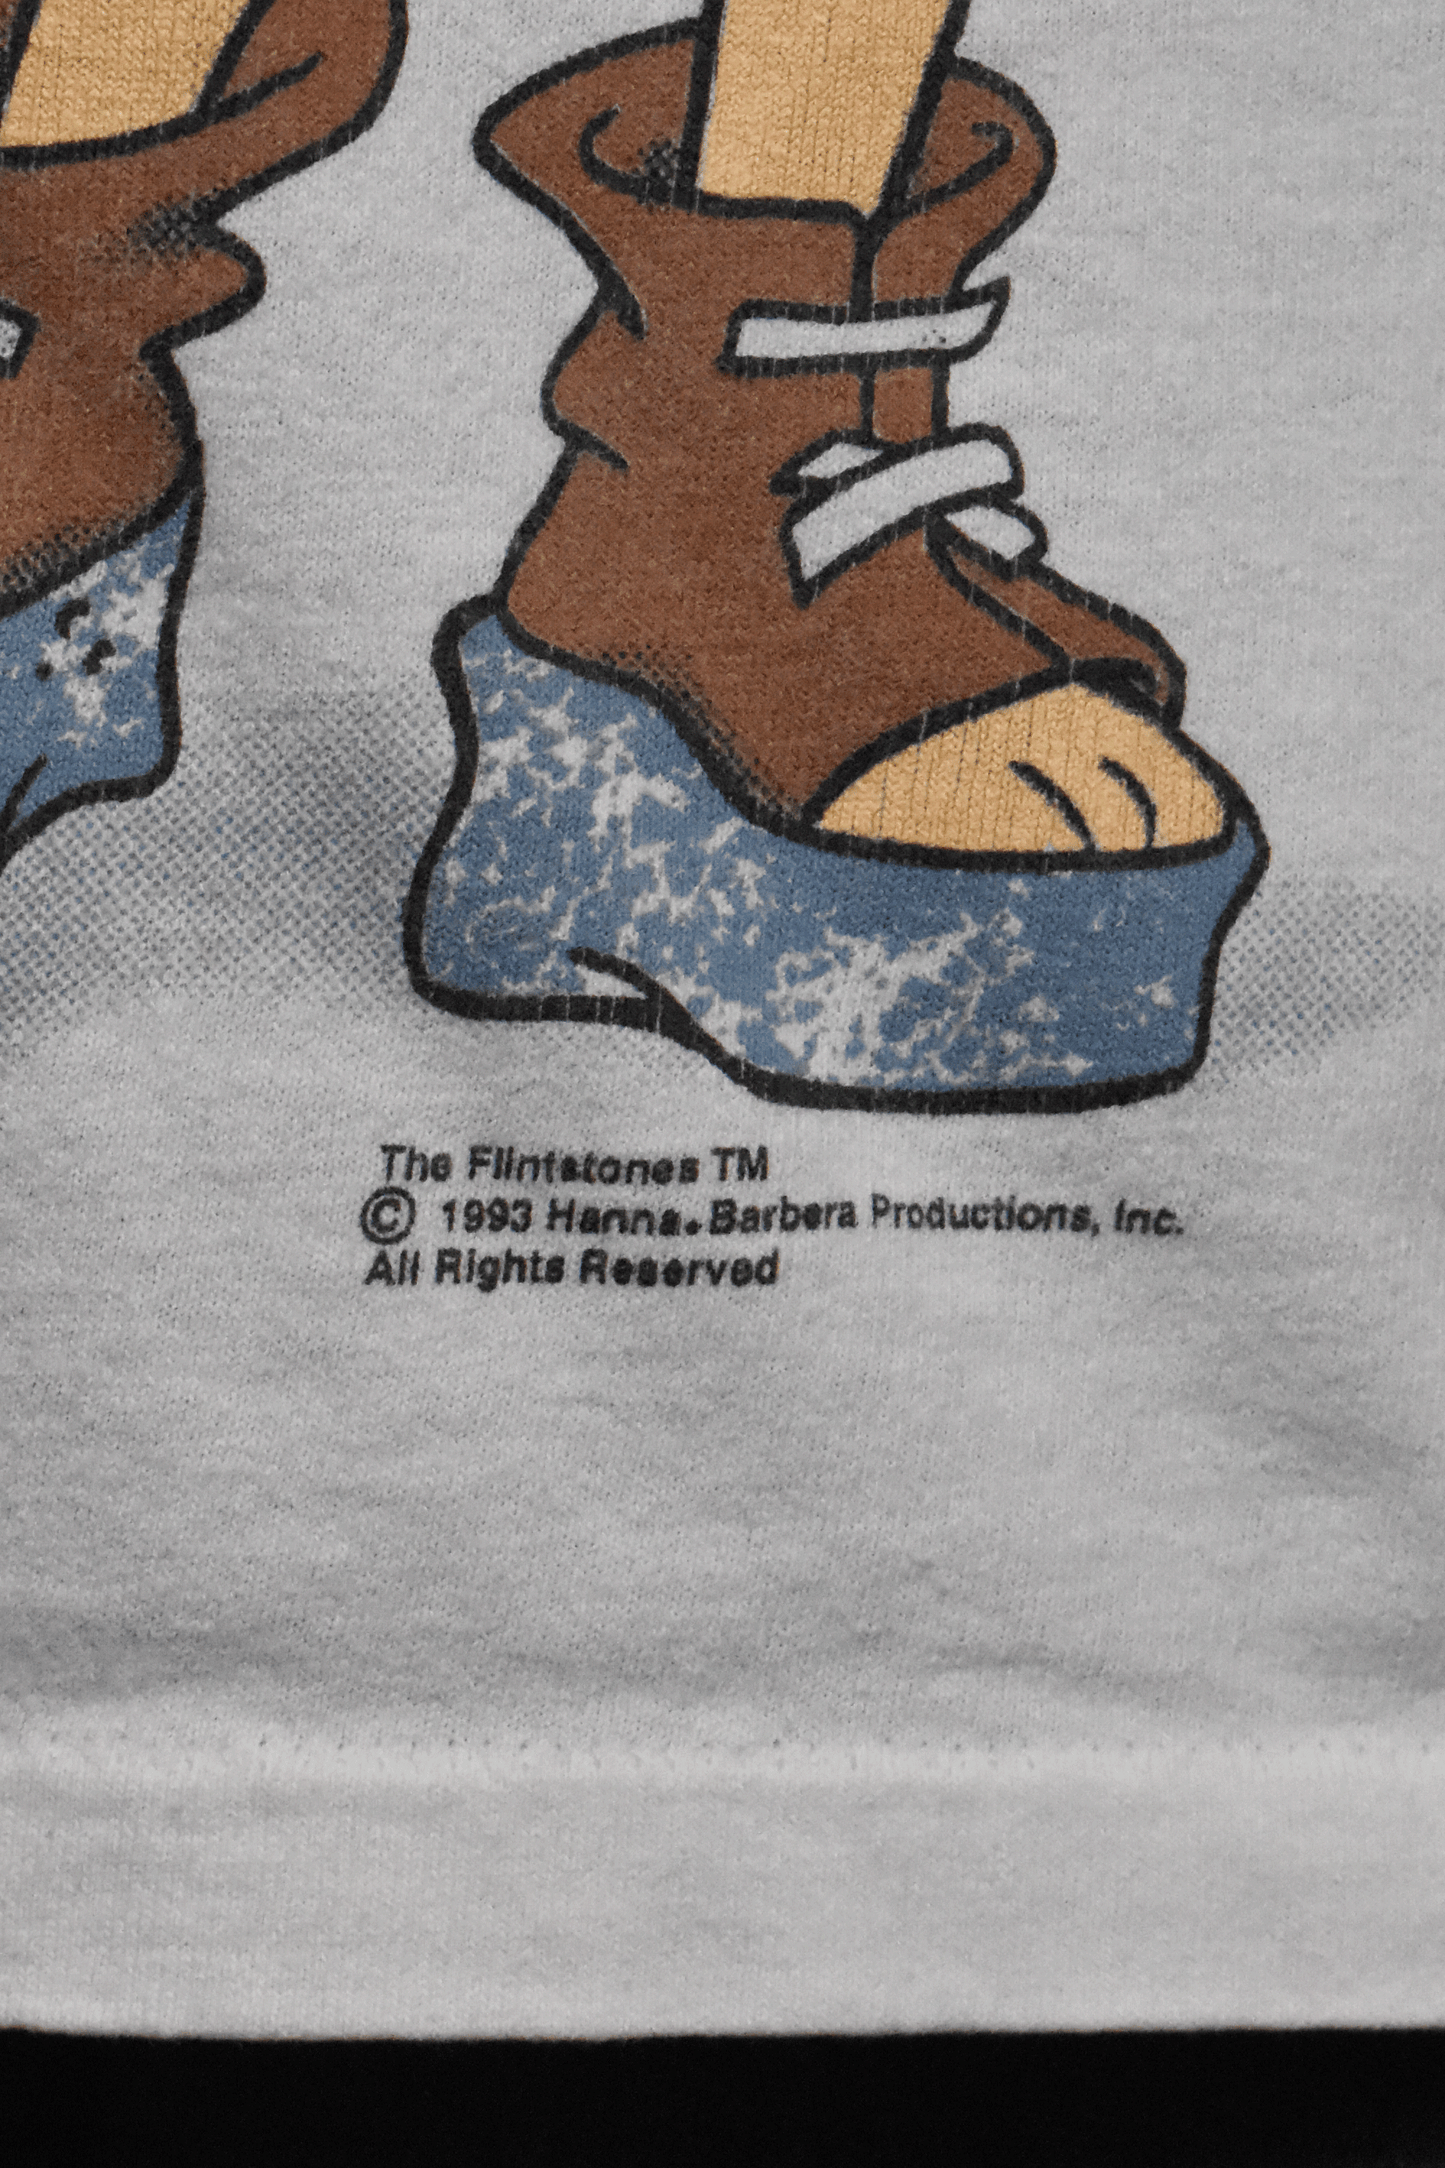 Vintage 1990s "The Flintstones" Betty & Wilma T-shirt